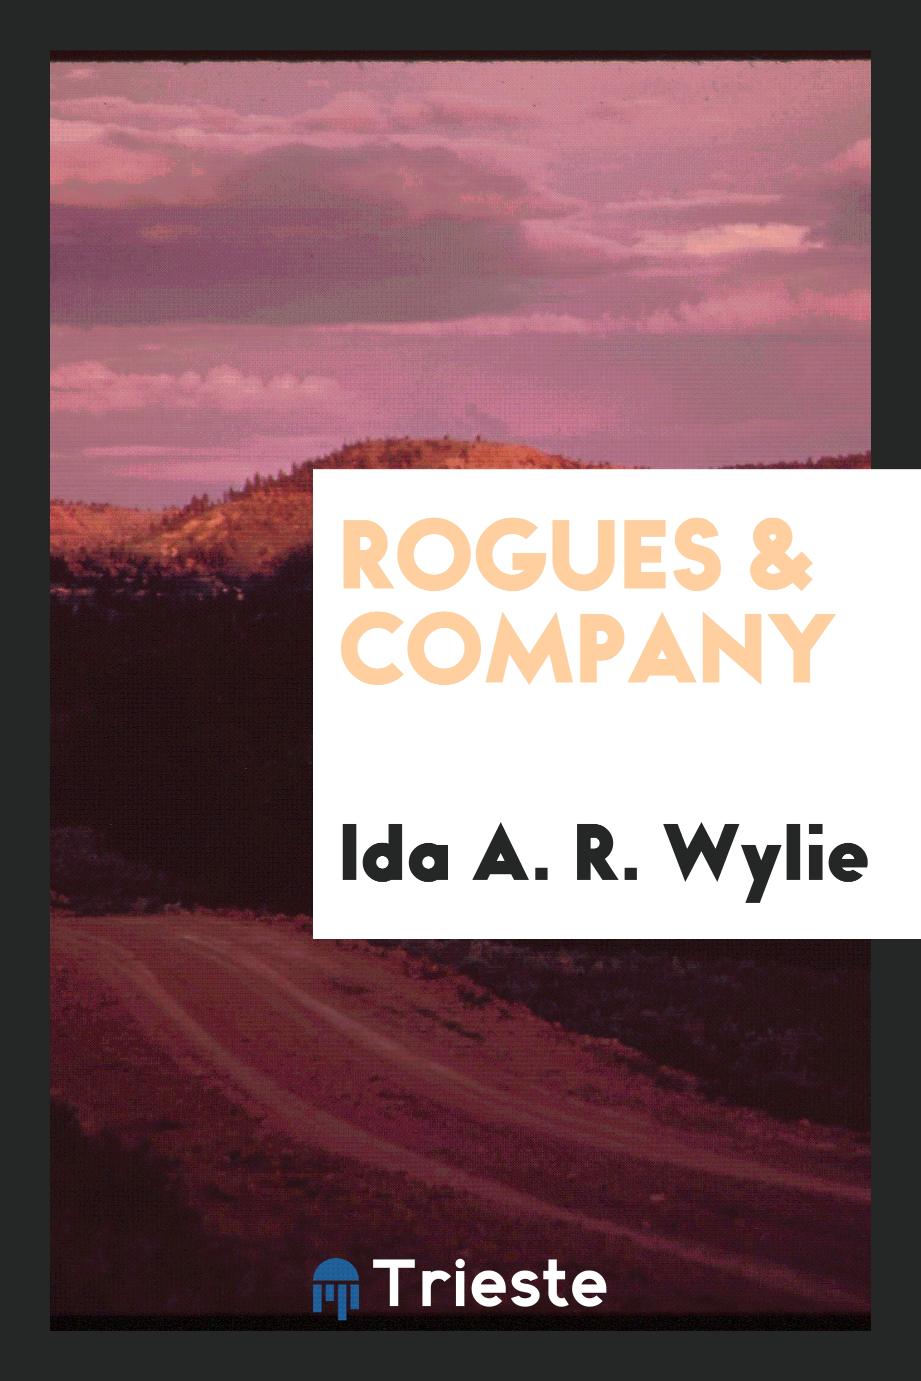 Rogues & company